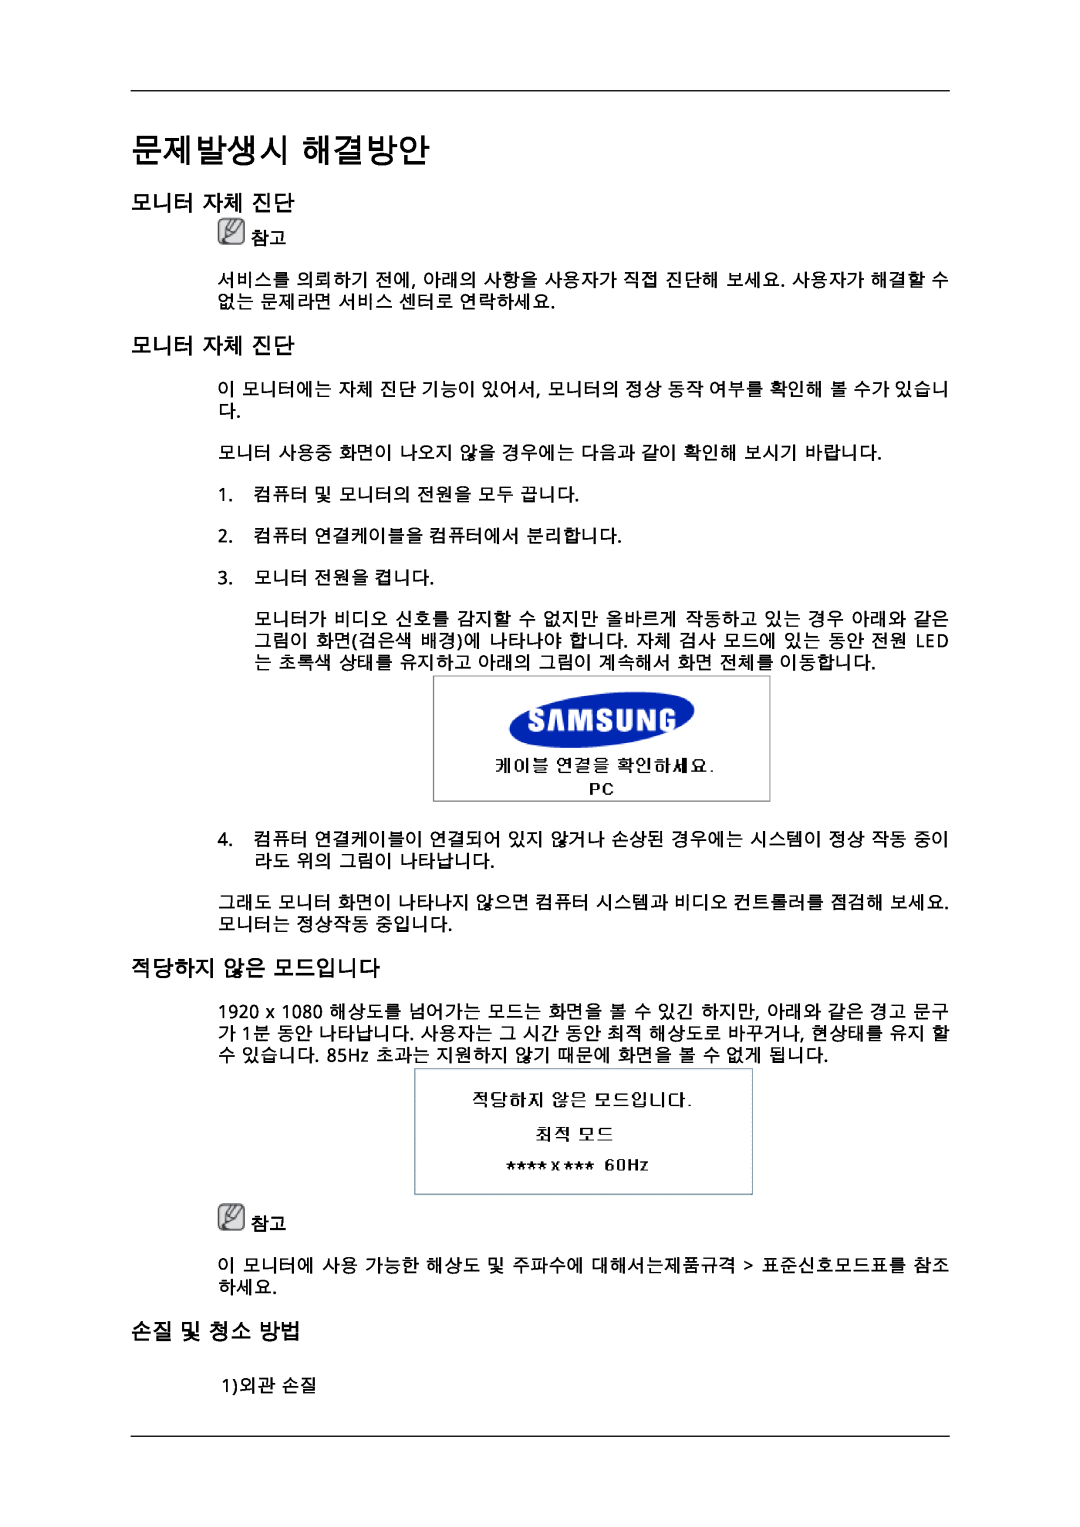 Samsung 725D quick start 문제발생시 해결방안, 모니터 자체 진단, 적당하지 않은 모드입니다, 손질 및 청소 방법 